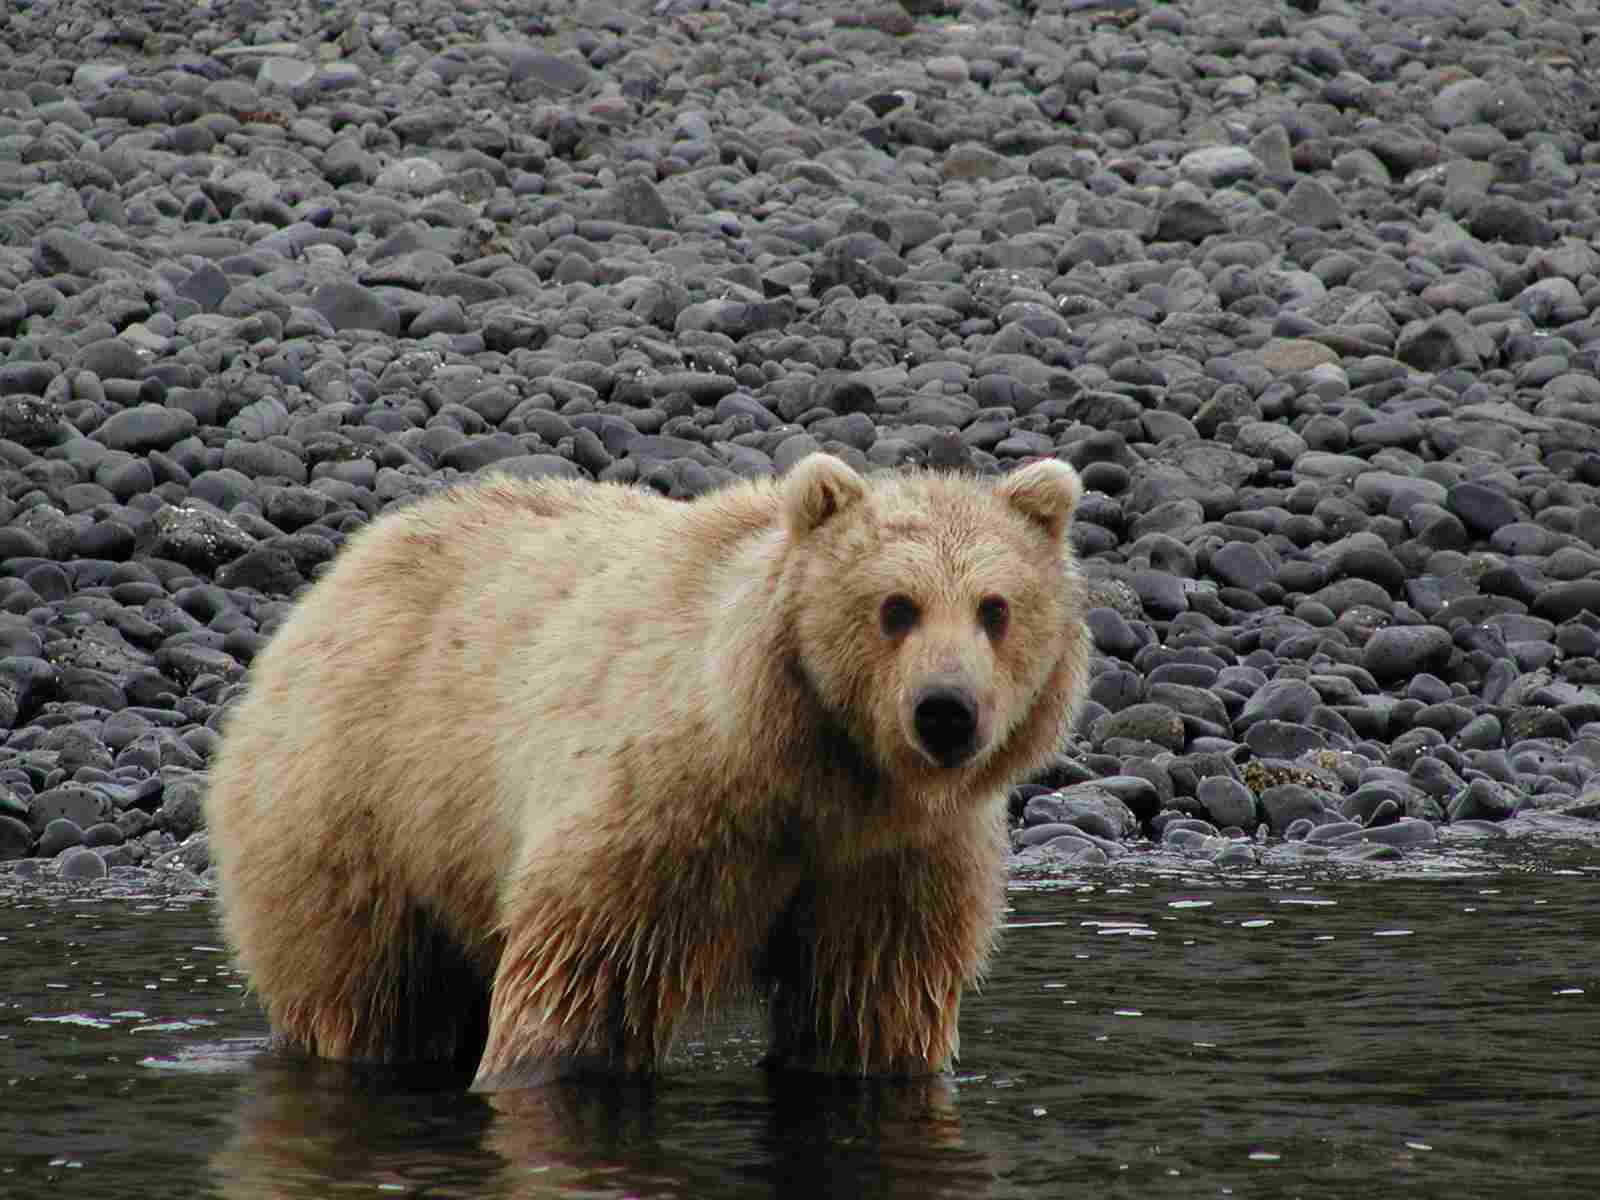 Kodiak Bear Vs Gorilla: Kodiak Bears are Larger and Heavier Than Gorillas (Credit: Bureau of Land Management Alaska 2002, Uploaded Online 2020 .CC BY 2.0.)